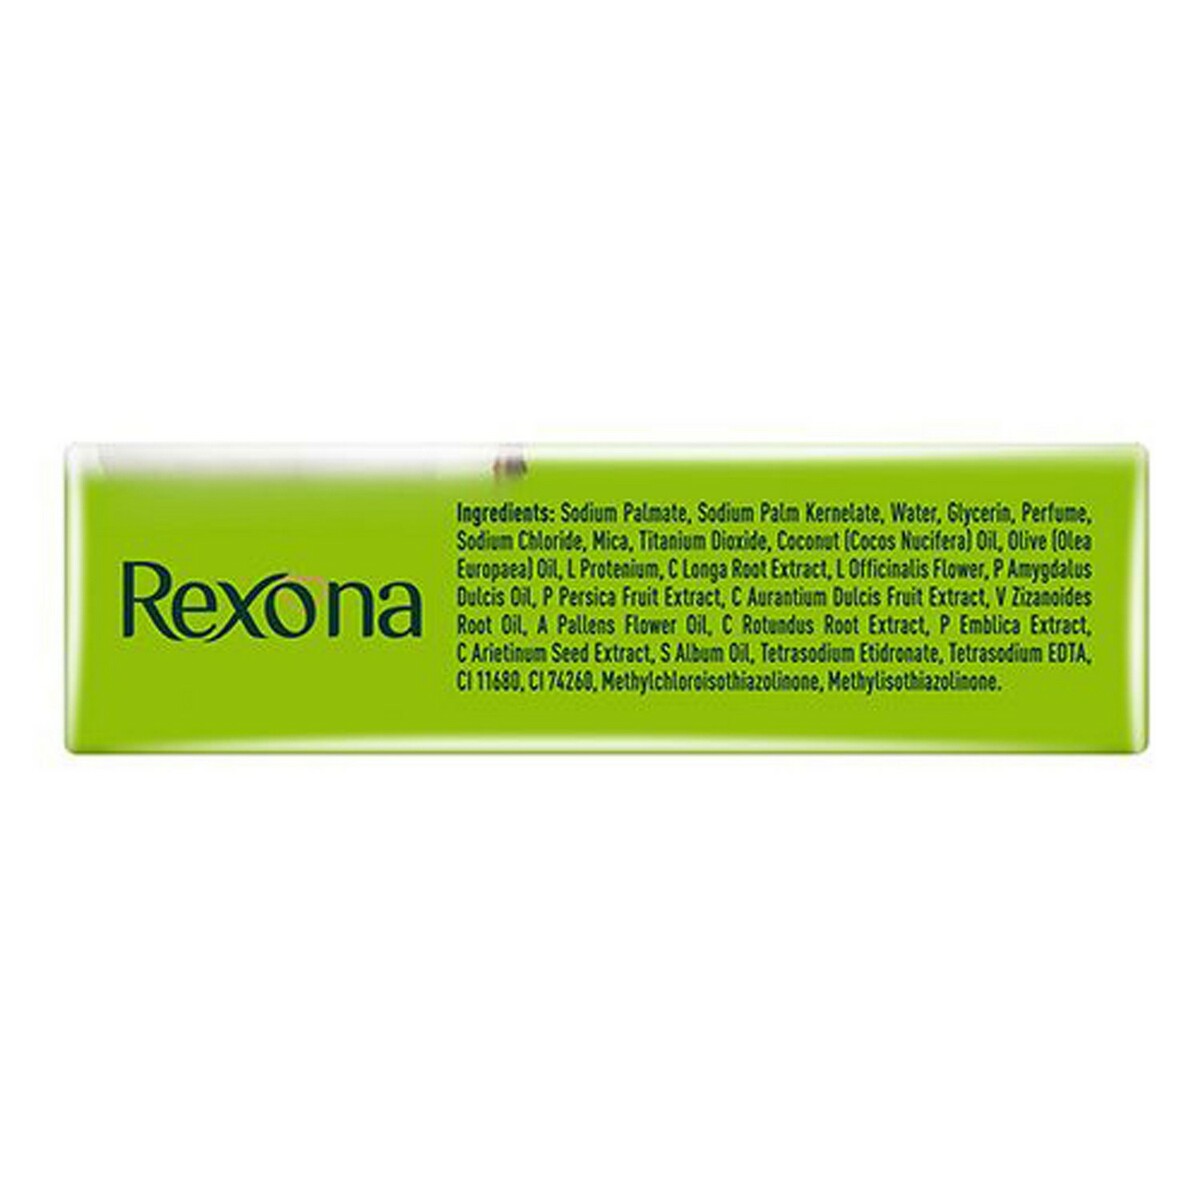 Rexona Soap Silky Soft Skin 150g